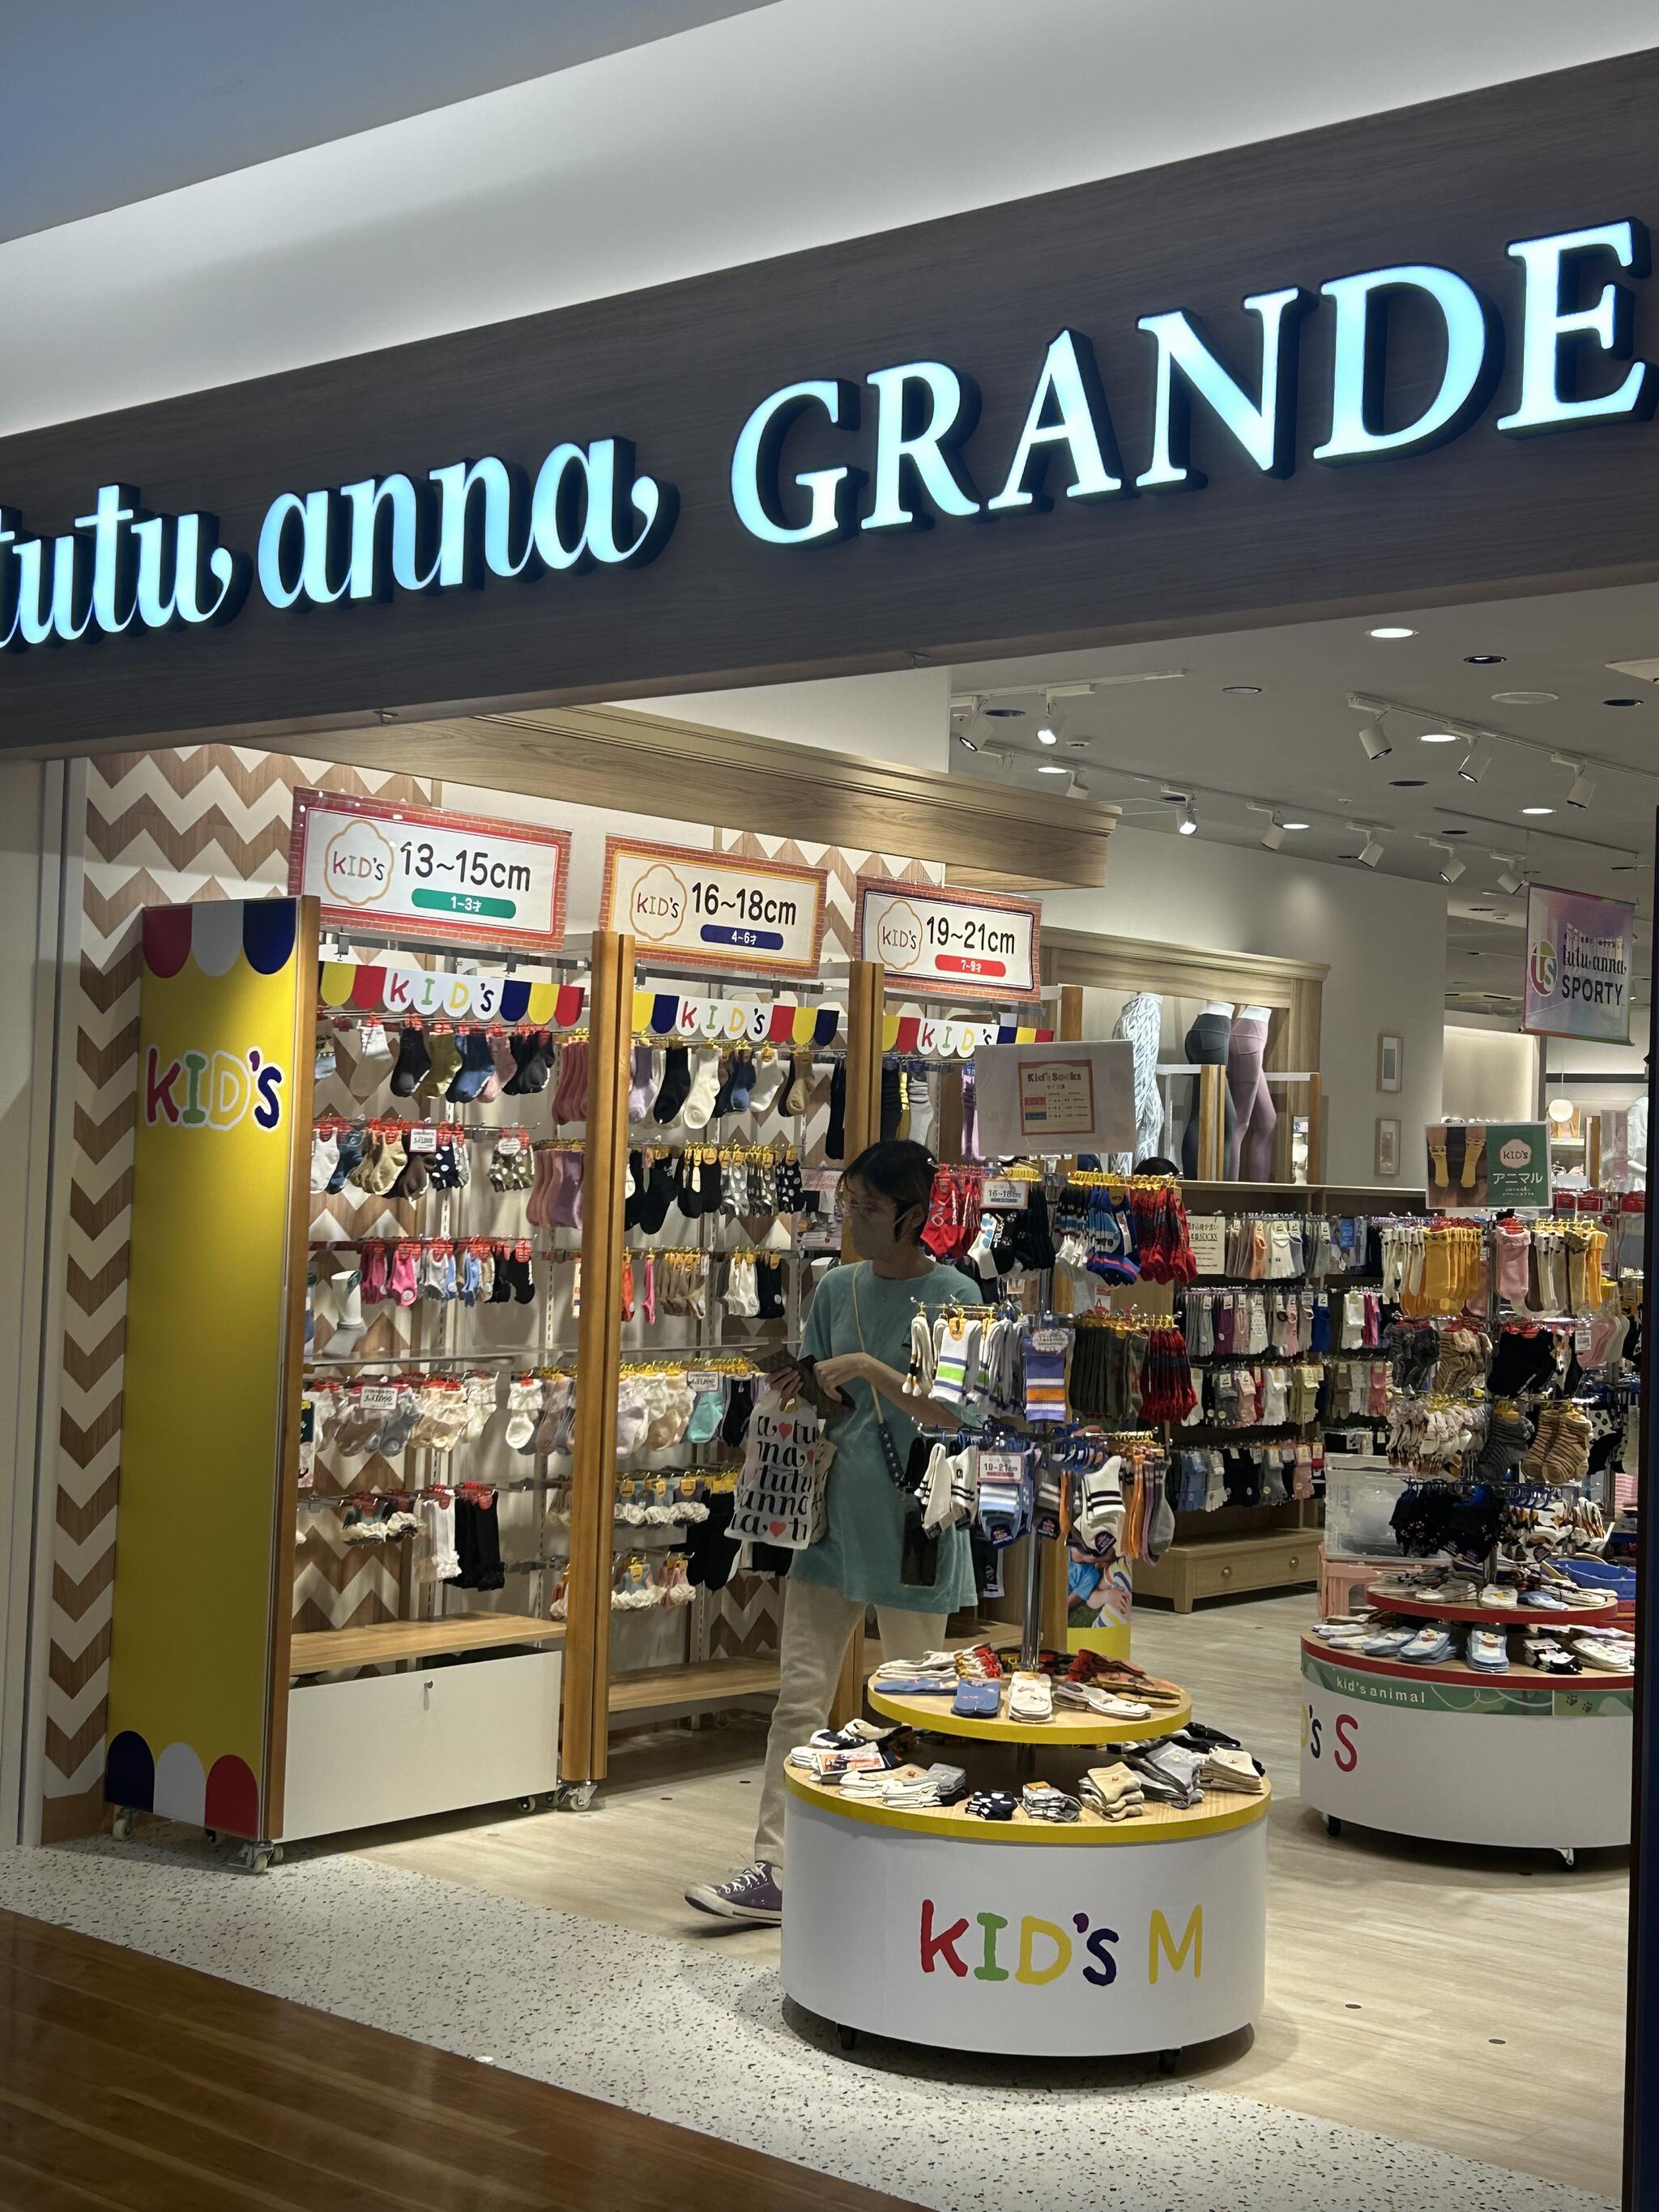 tutuanna GRANDE 港北ノースポート・モール店の代表写真4